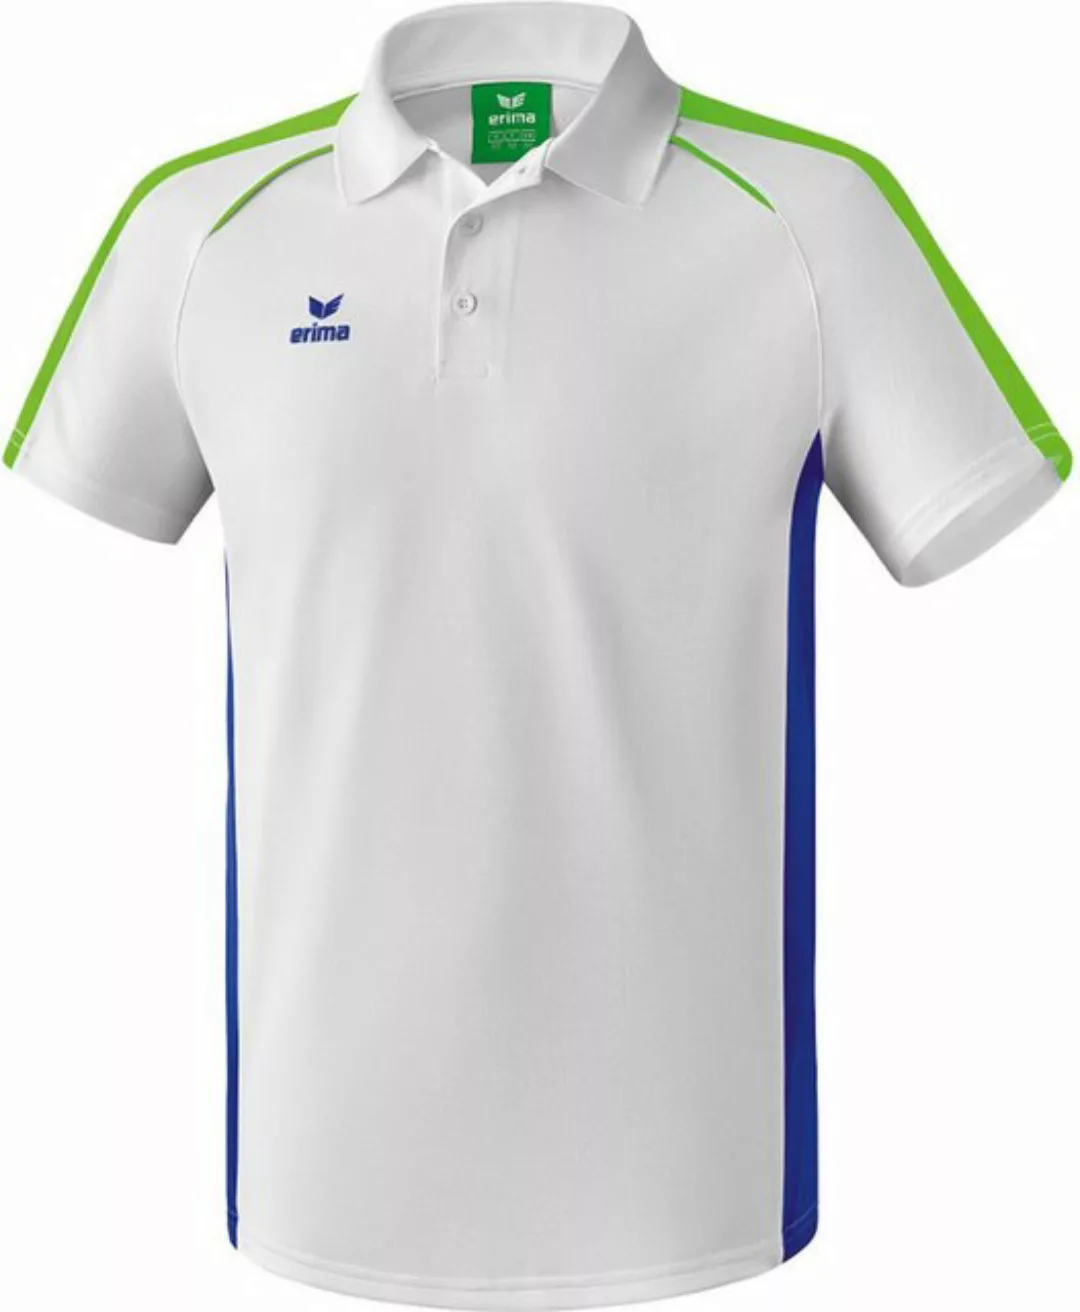 Erima Poloshirt MASTERS polo shirt günstig online kaufen